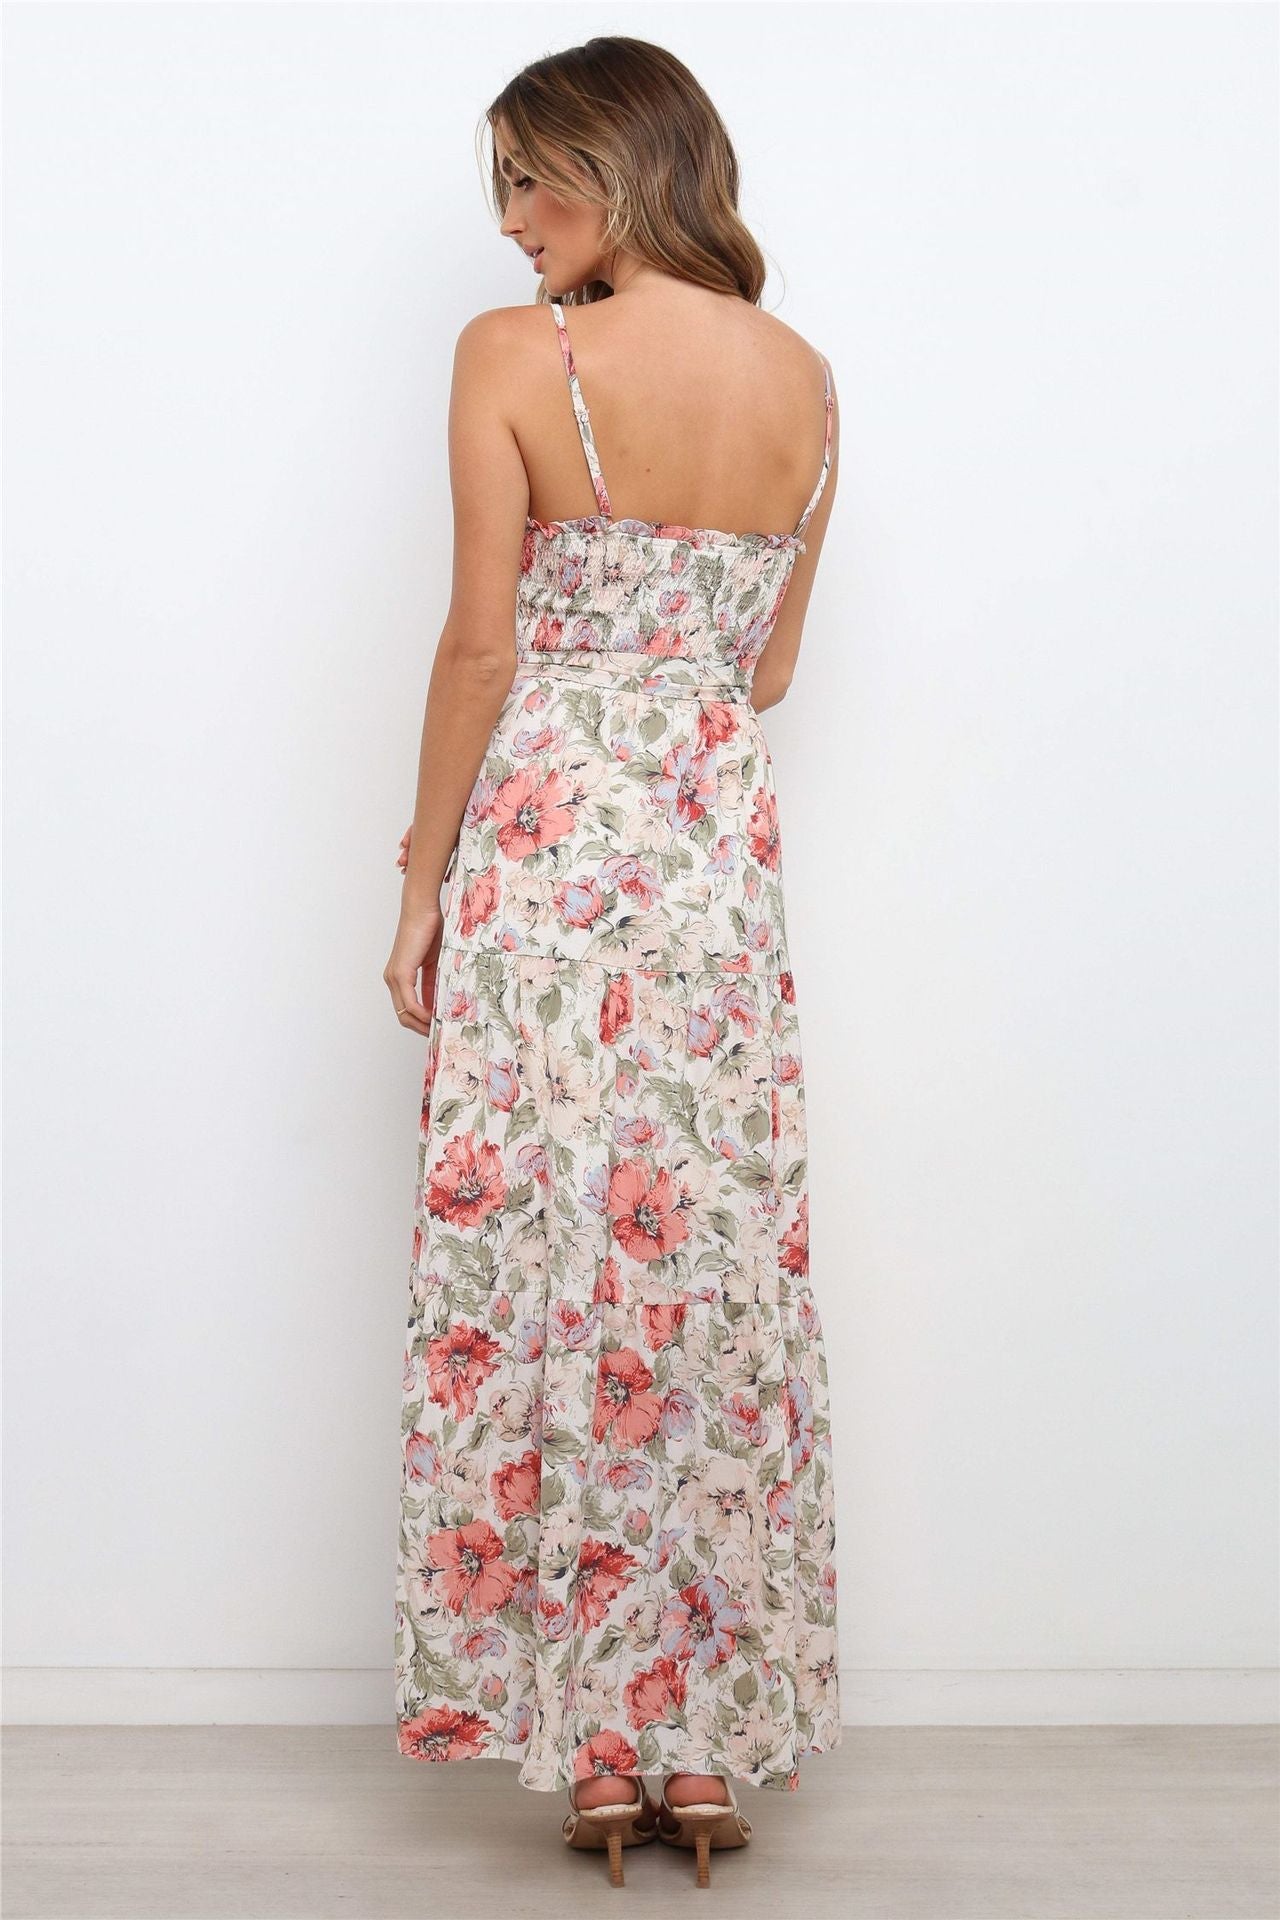 Lilyanne Floral Smocked Tie Strap Maxi Dress - Blush Multi